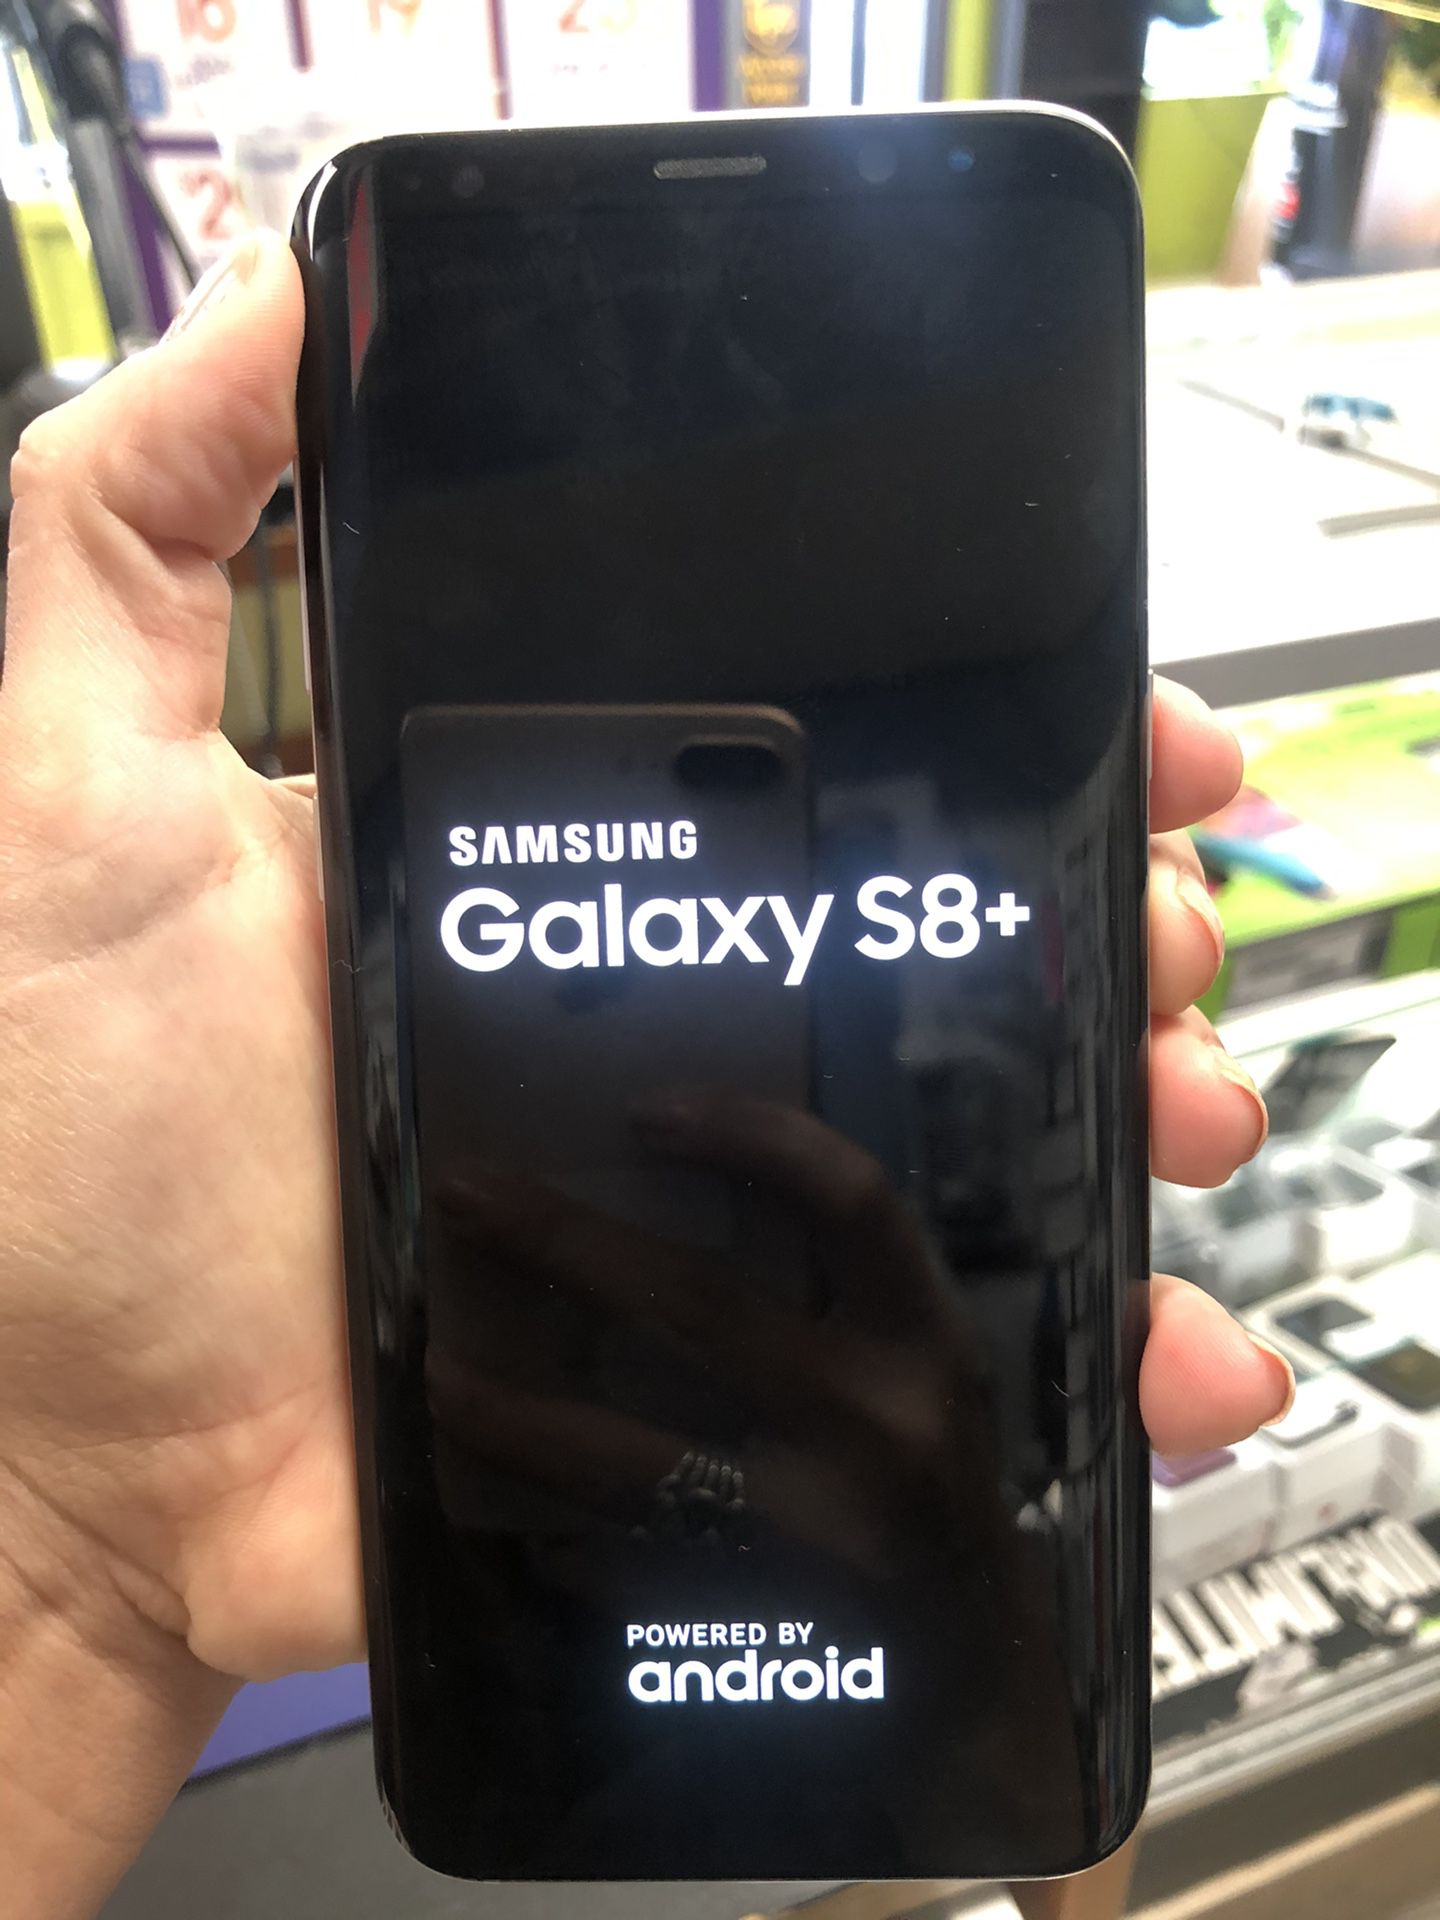 Samsung Galaxy s8plus, 64 gb unlocked